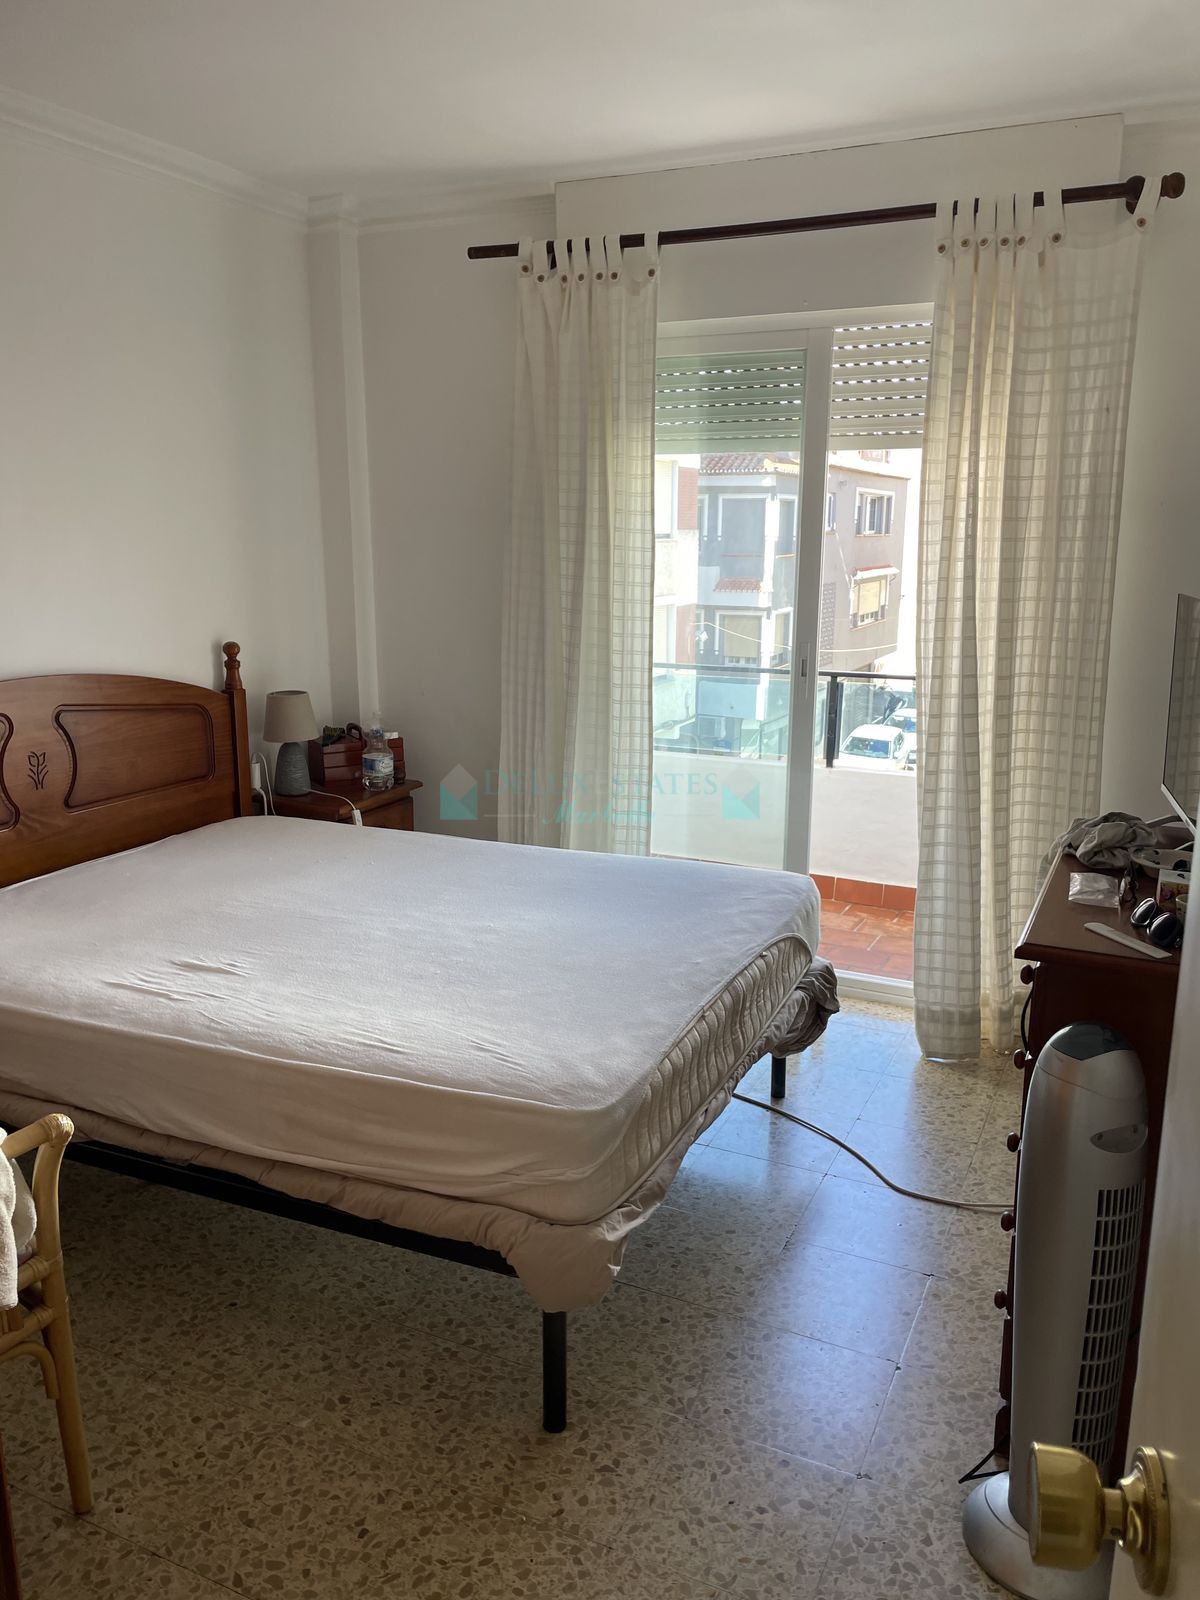 Apartment for sale in San Pedro de Alcantara